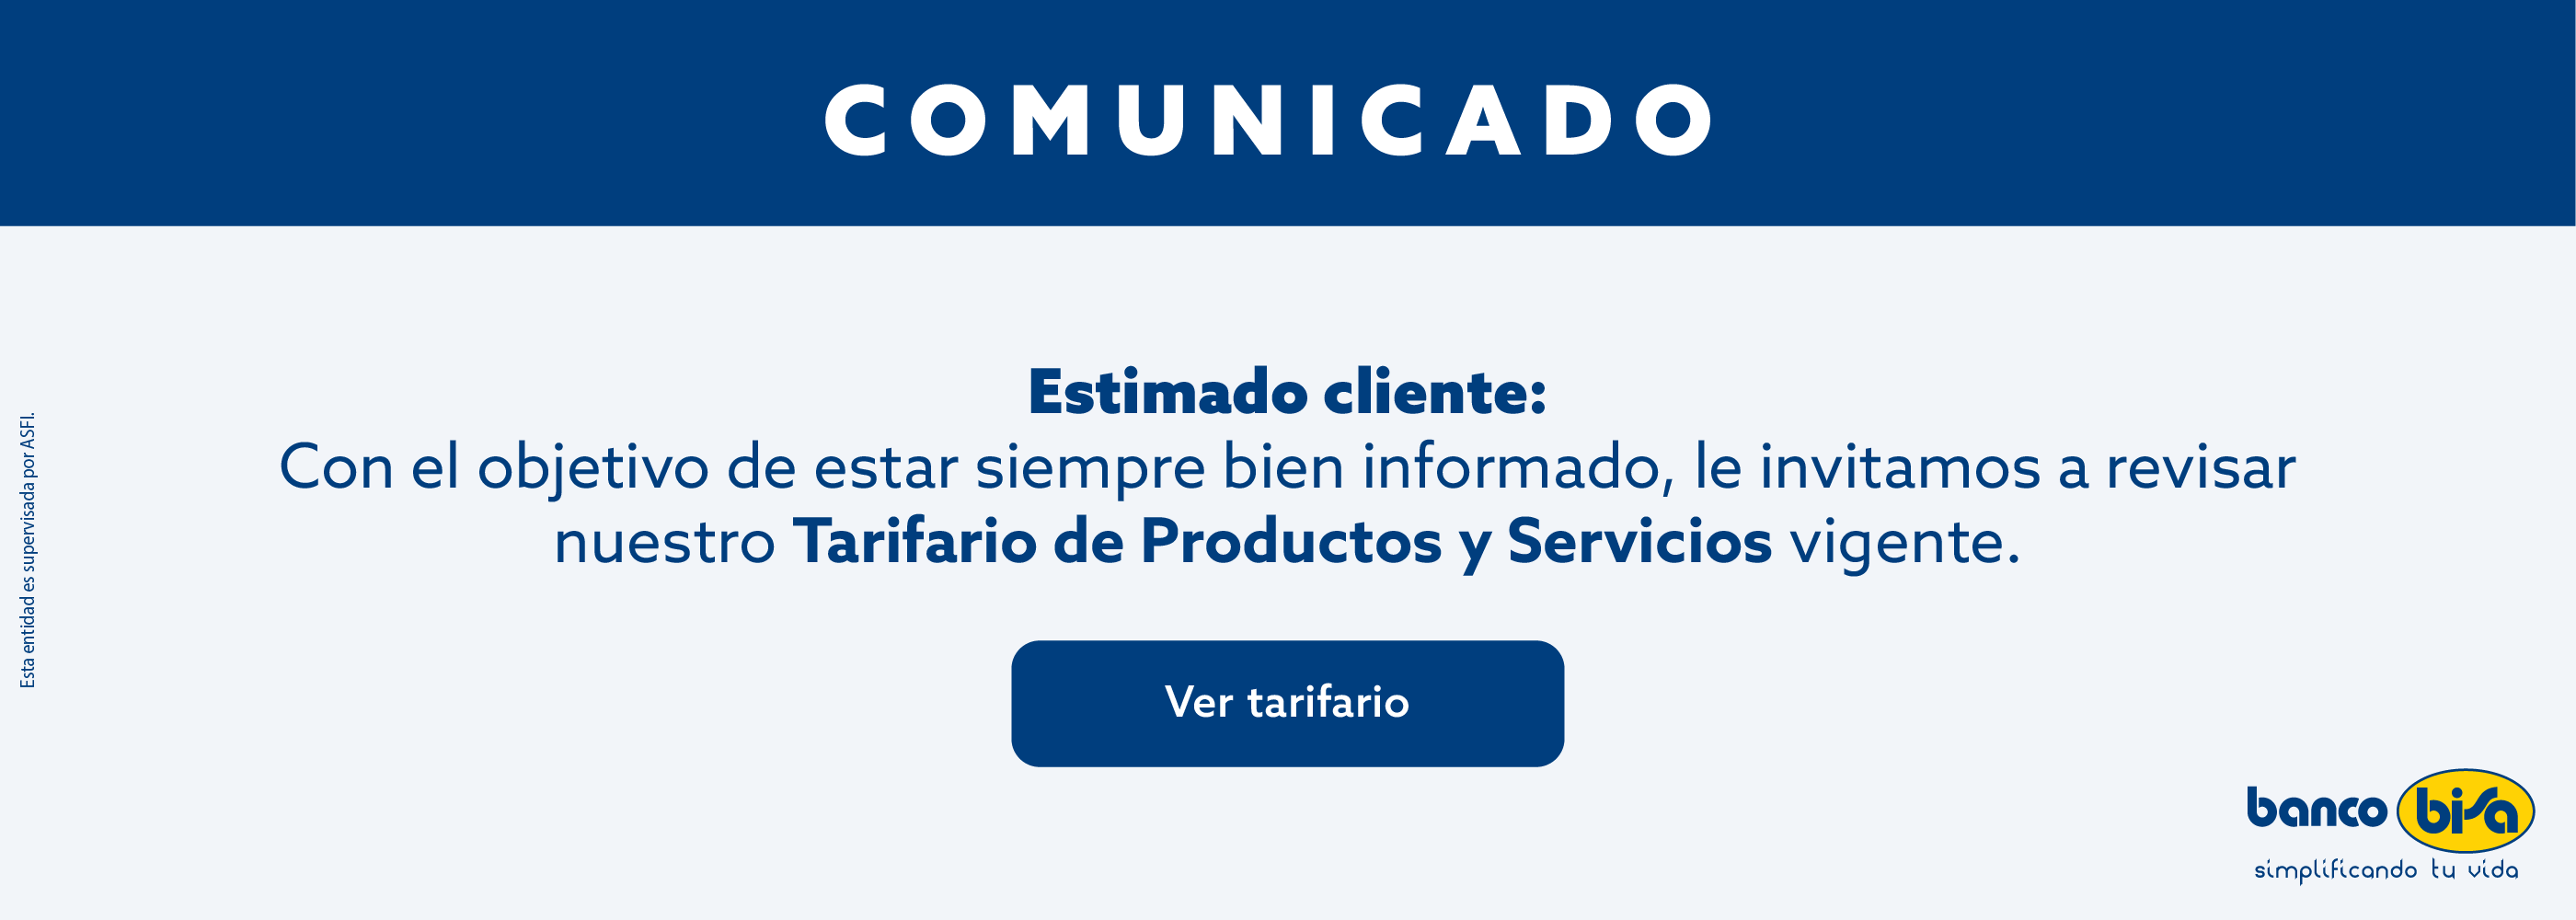 Comunicado_Tarifarios-02.png